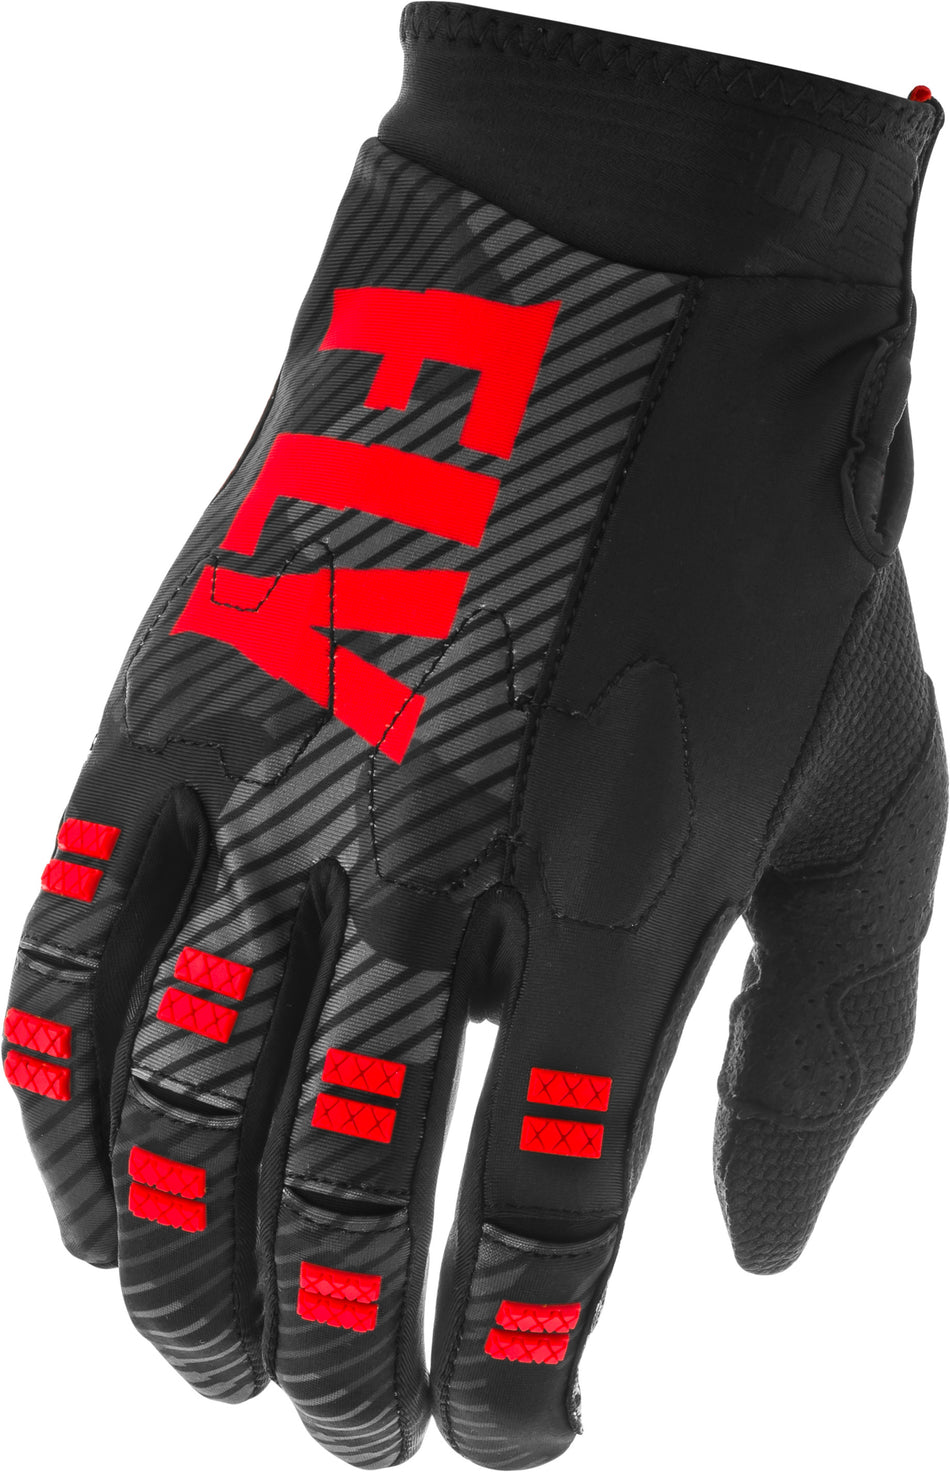 FLY RACING Evolution Gloves Red/Black Sz 13 373-11213